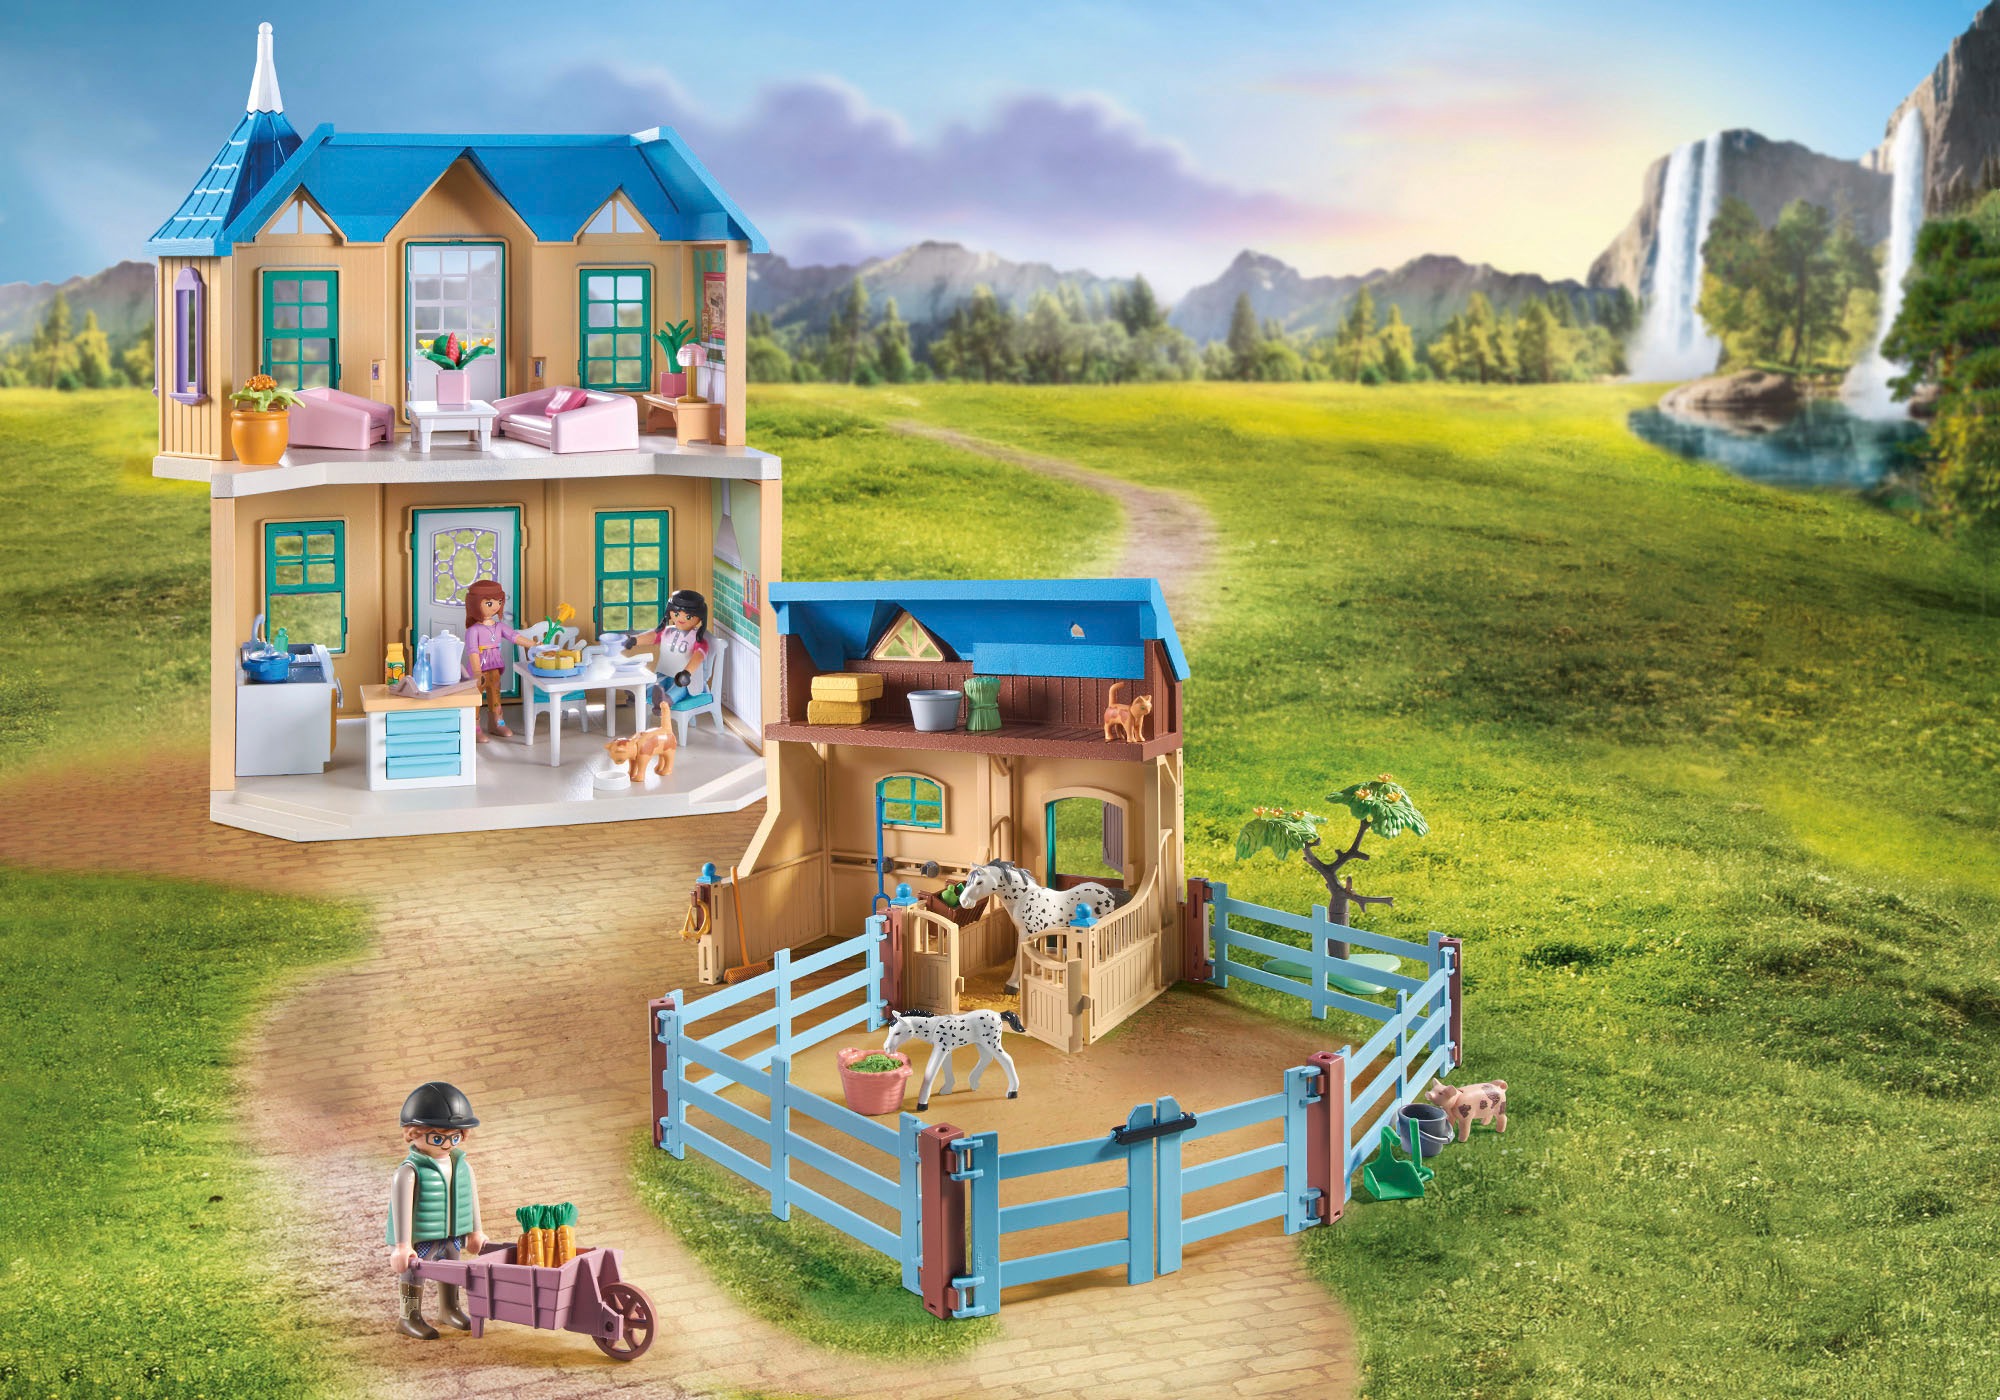 Playmobil® Konstruktions-Spielset »Waterfall Ranch (71351), Horses of Waterfall«, (263 St.)